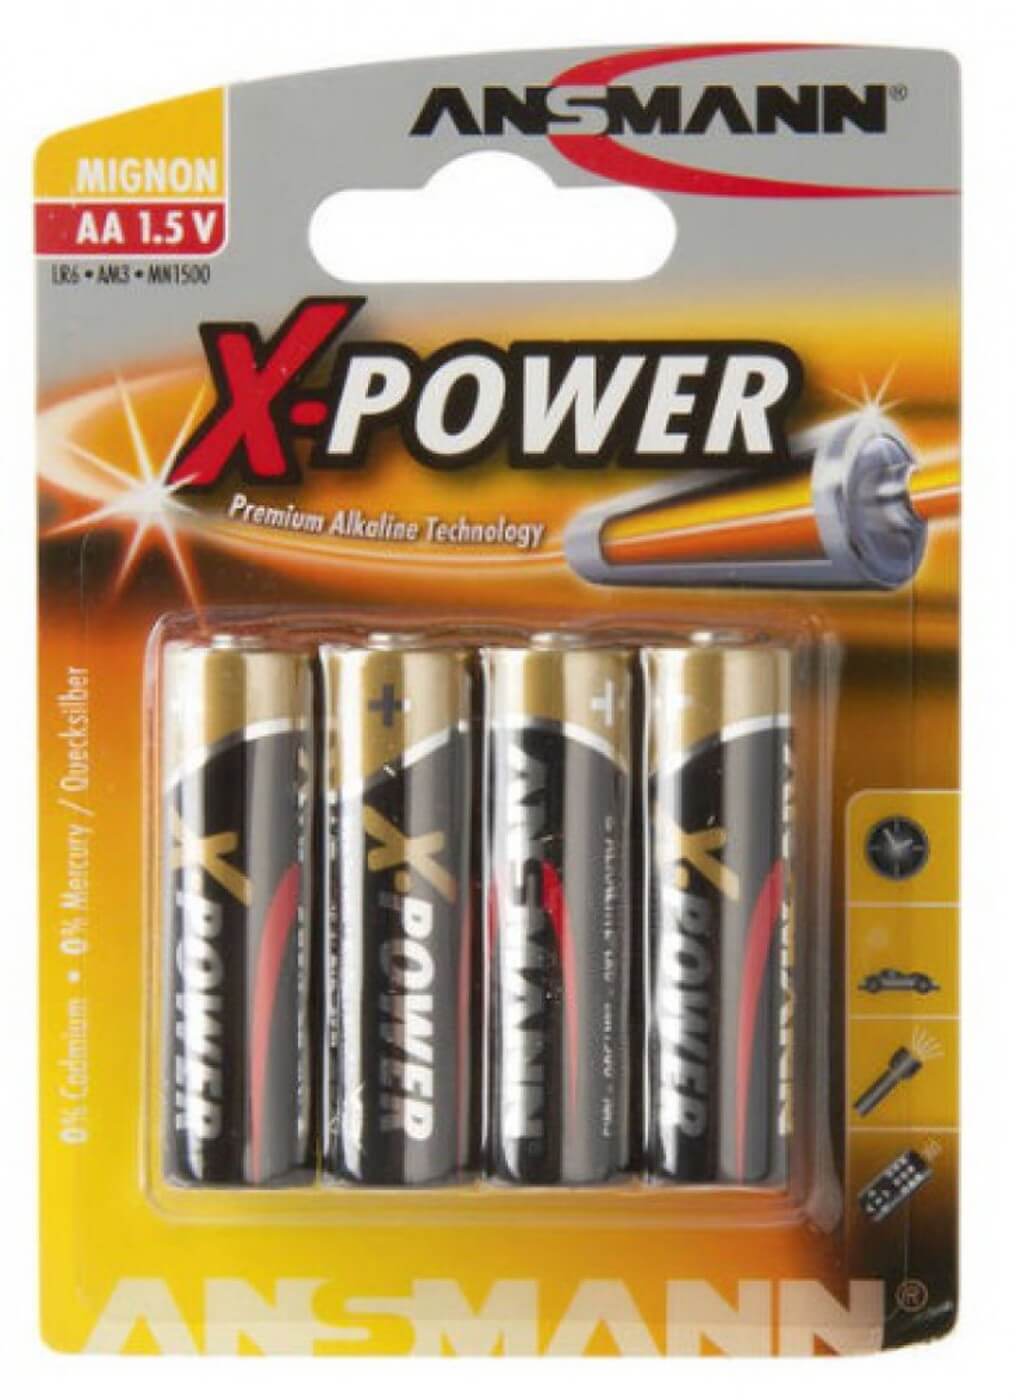 Ansman aa batteries